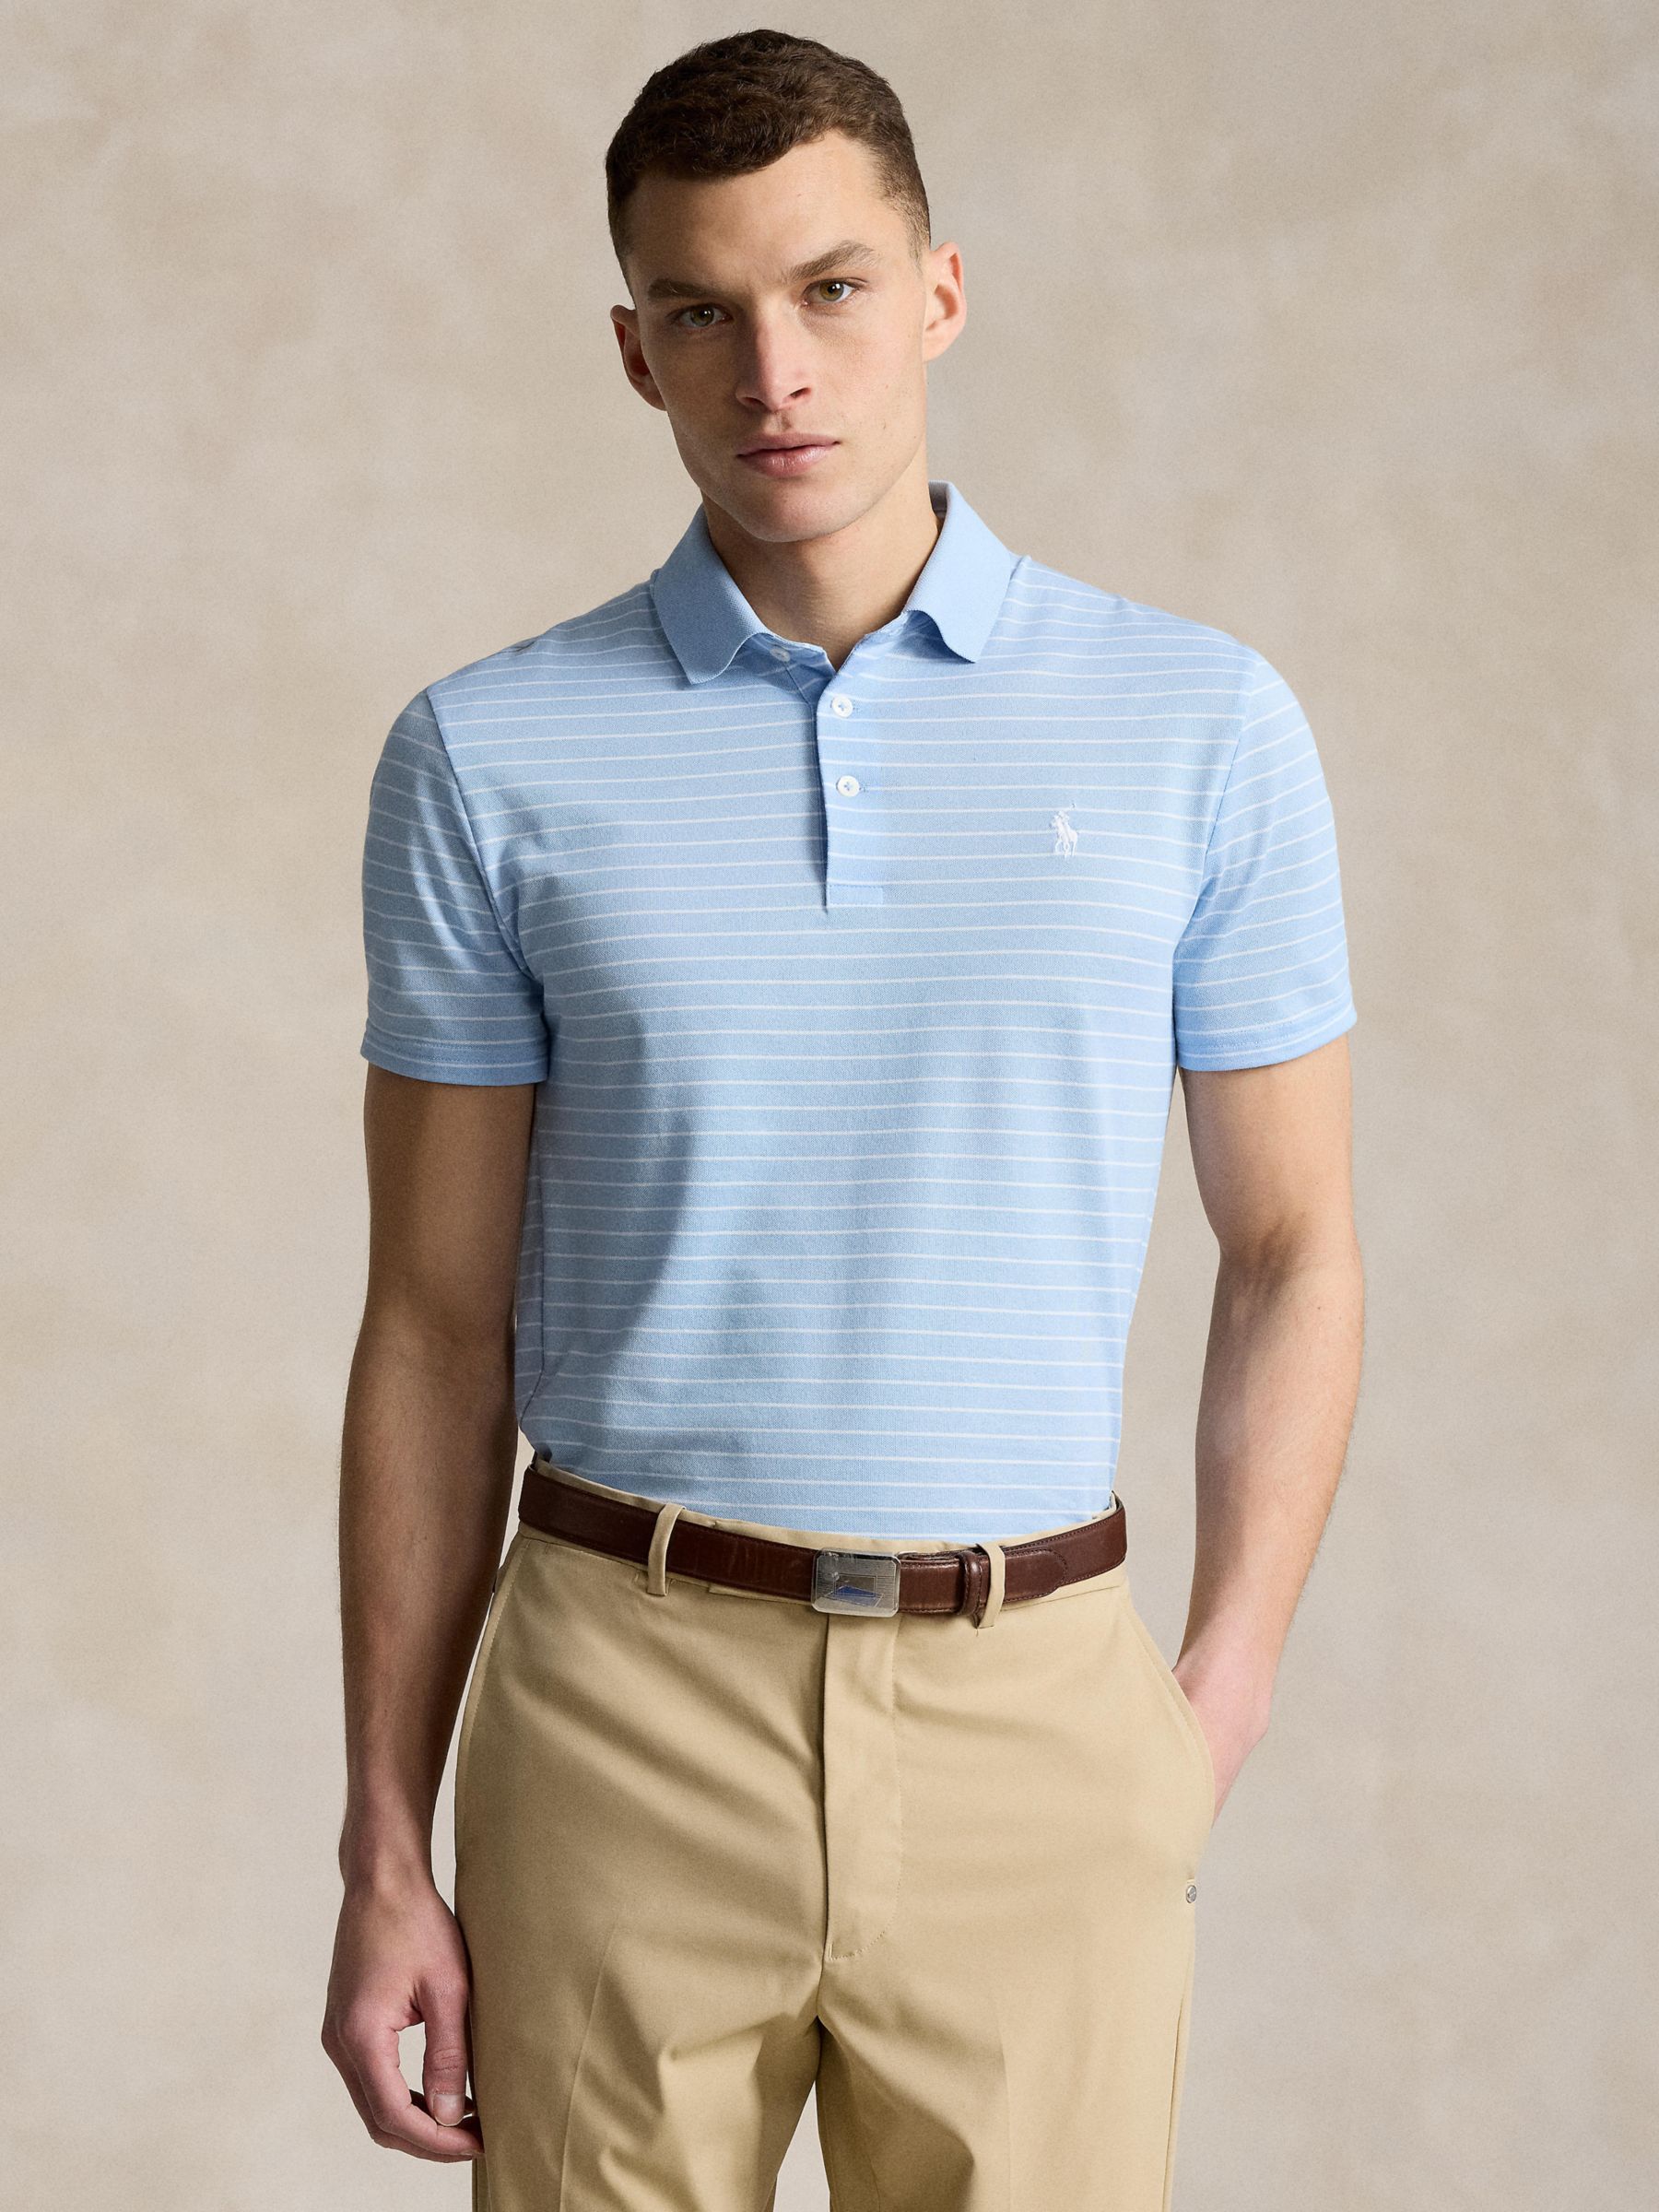 Ralph Lauren Tailored Fit Performance Stripe Polo Shirt, Office Blue/Ceramic White, M